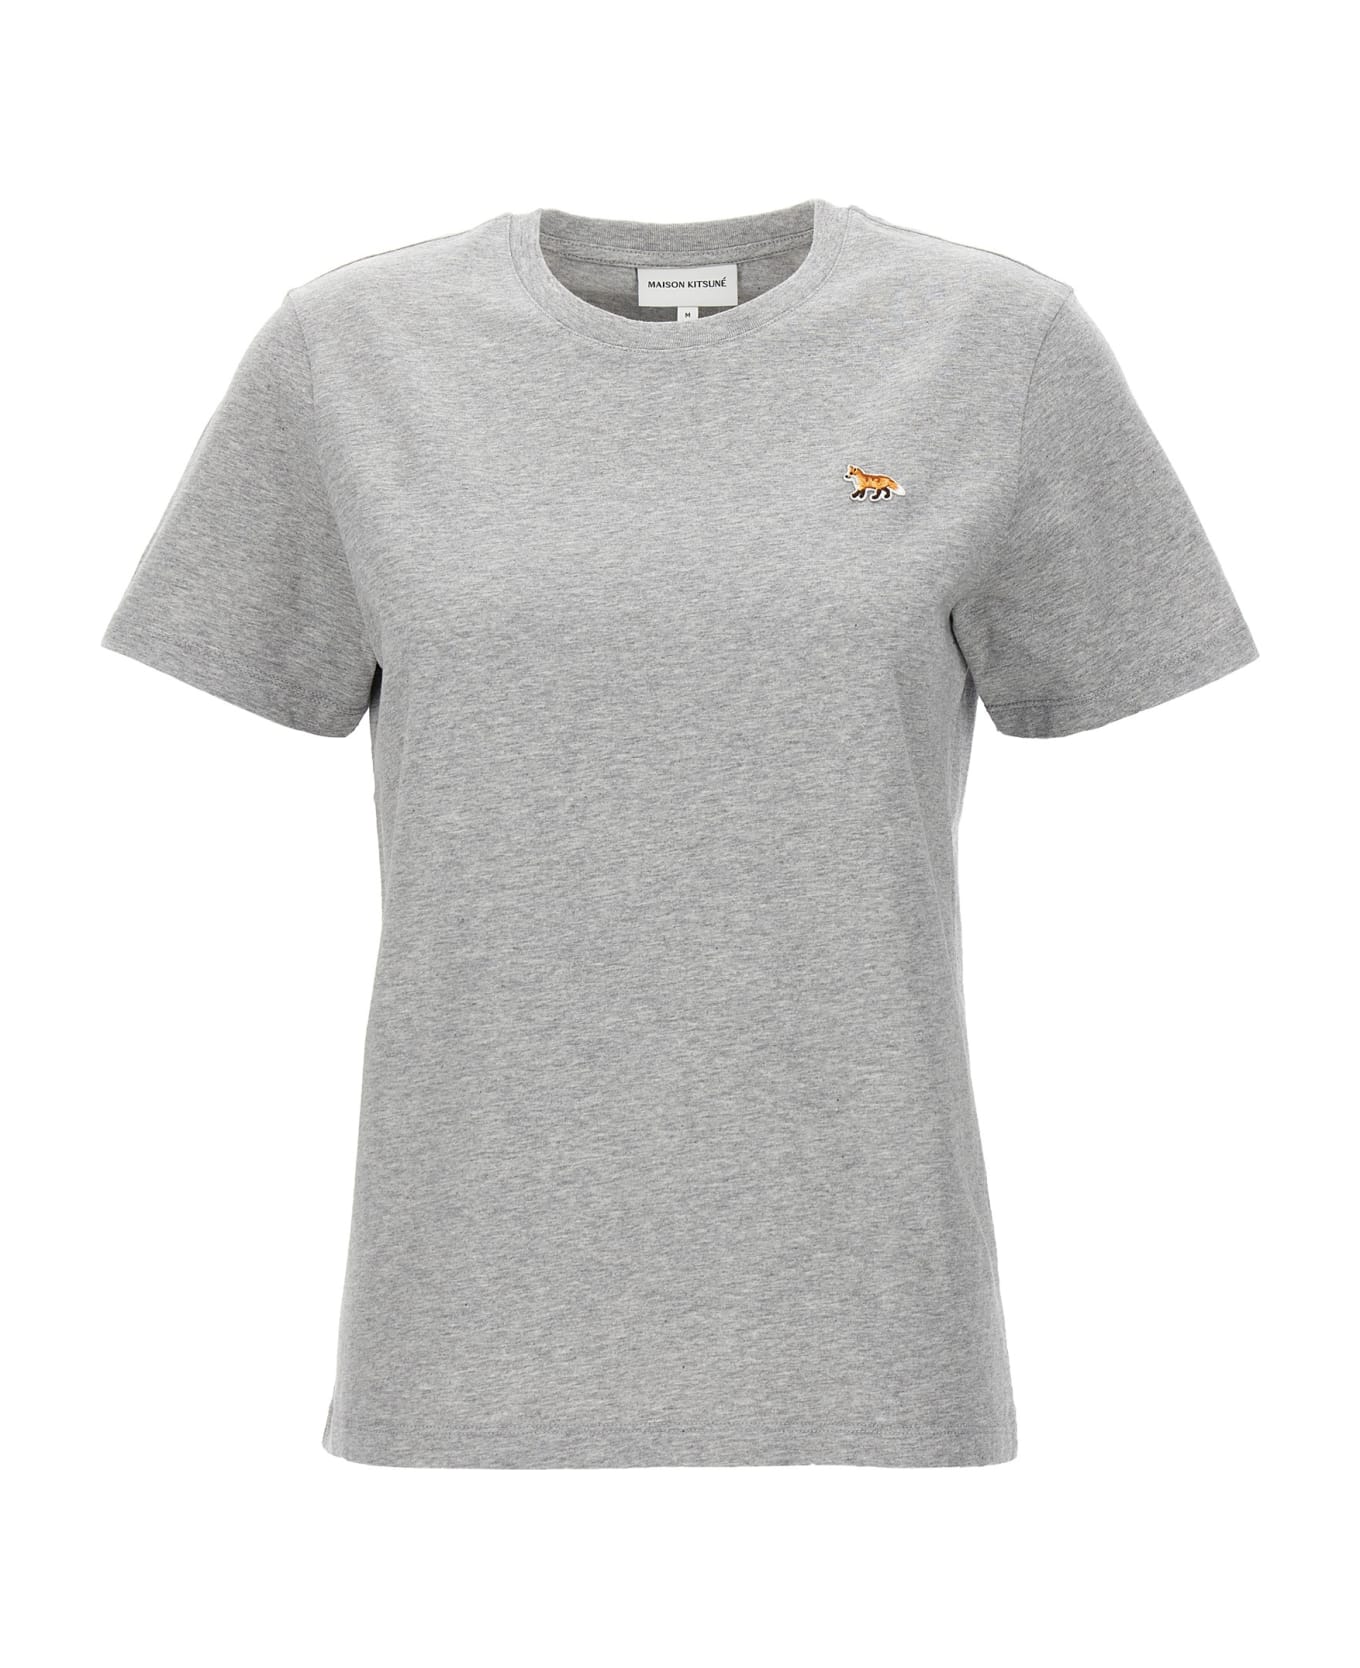 Maison Kitsuné 'baby Fox' T-shirt - Gray